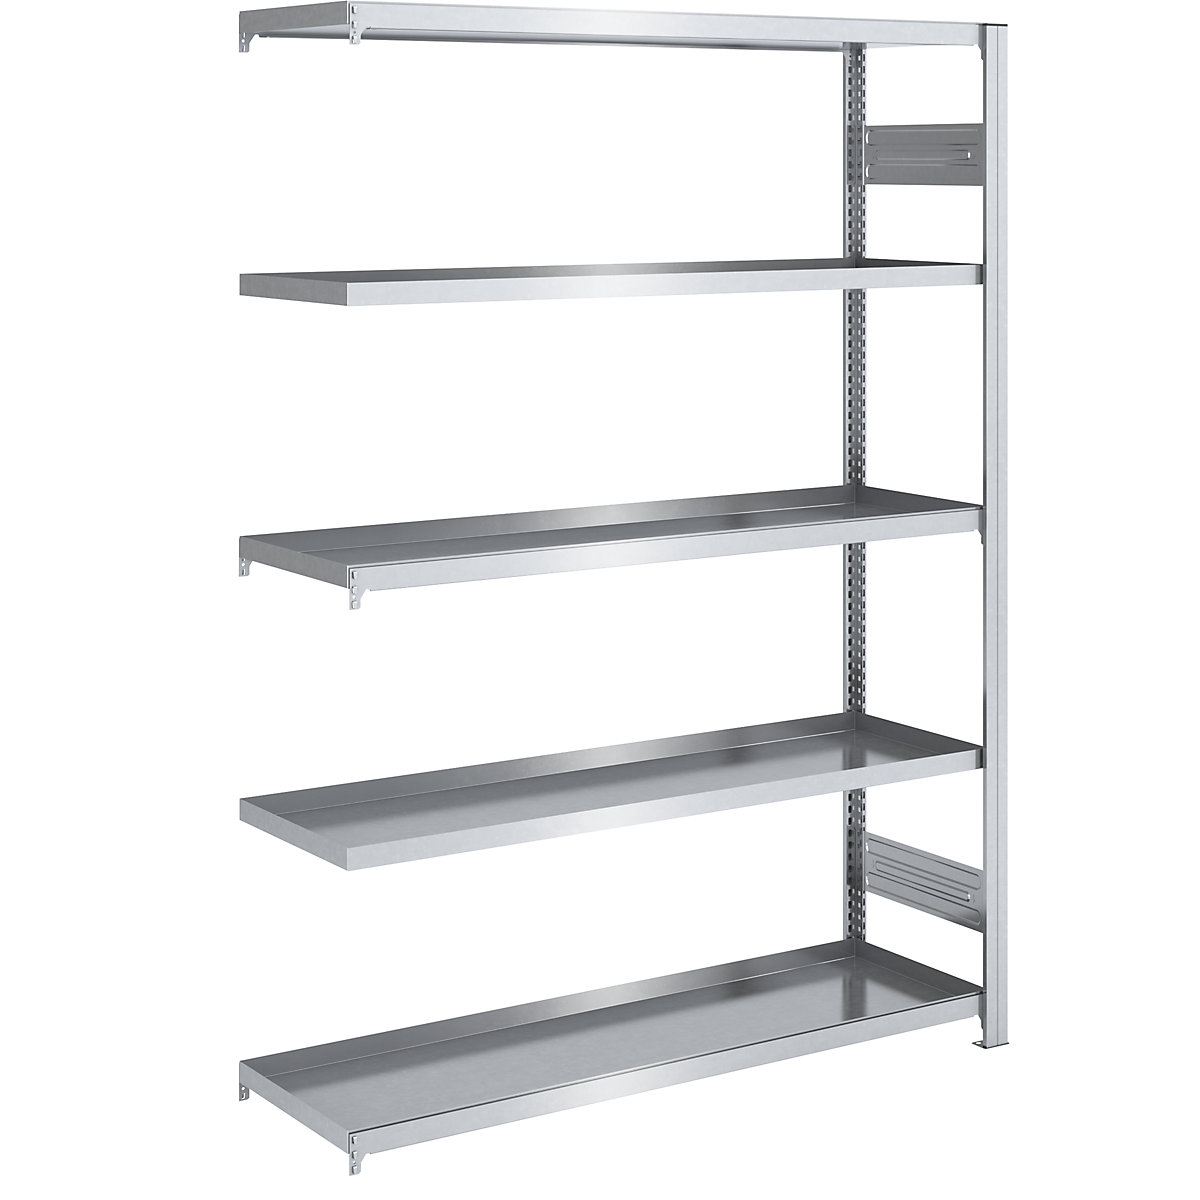 Tray shelf unit – hofe, shelf unit height 2000 mm, tray width 1300 mm, tray depth 500 mm, extension shelf unit